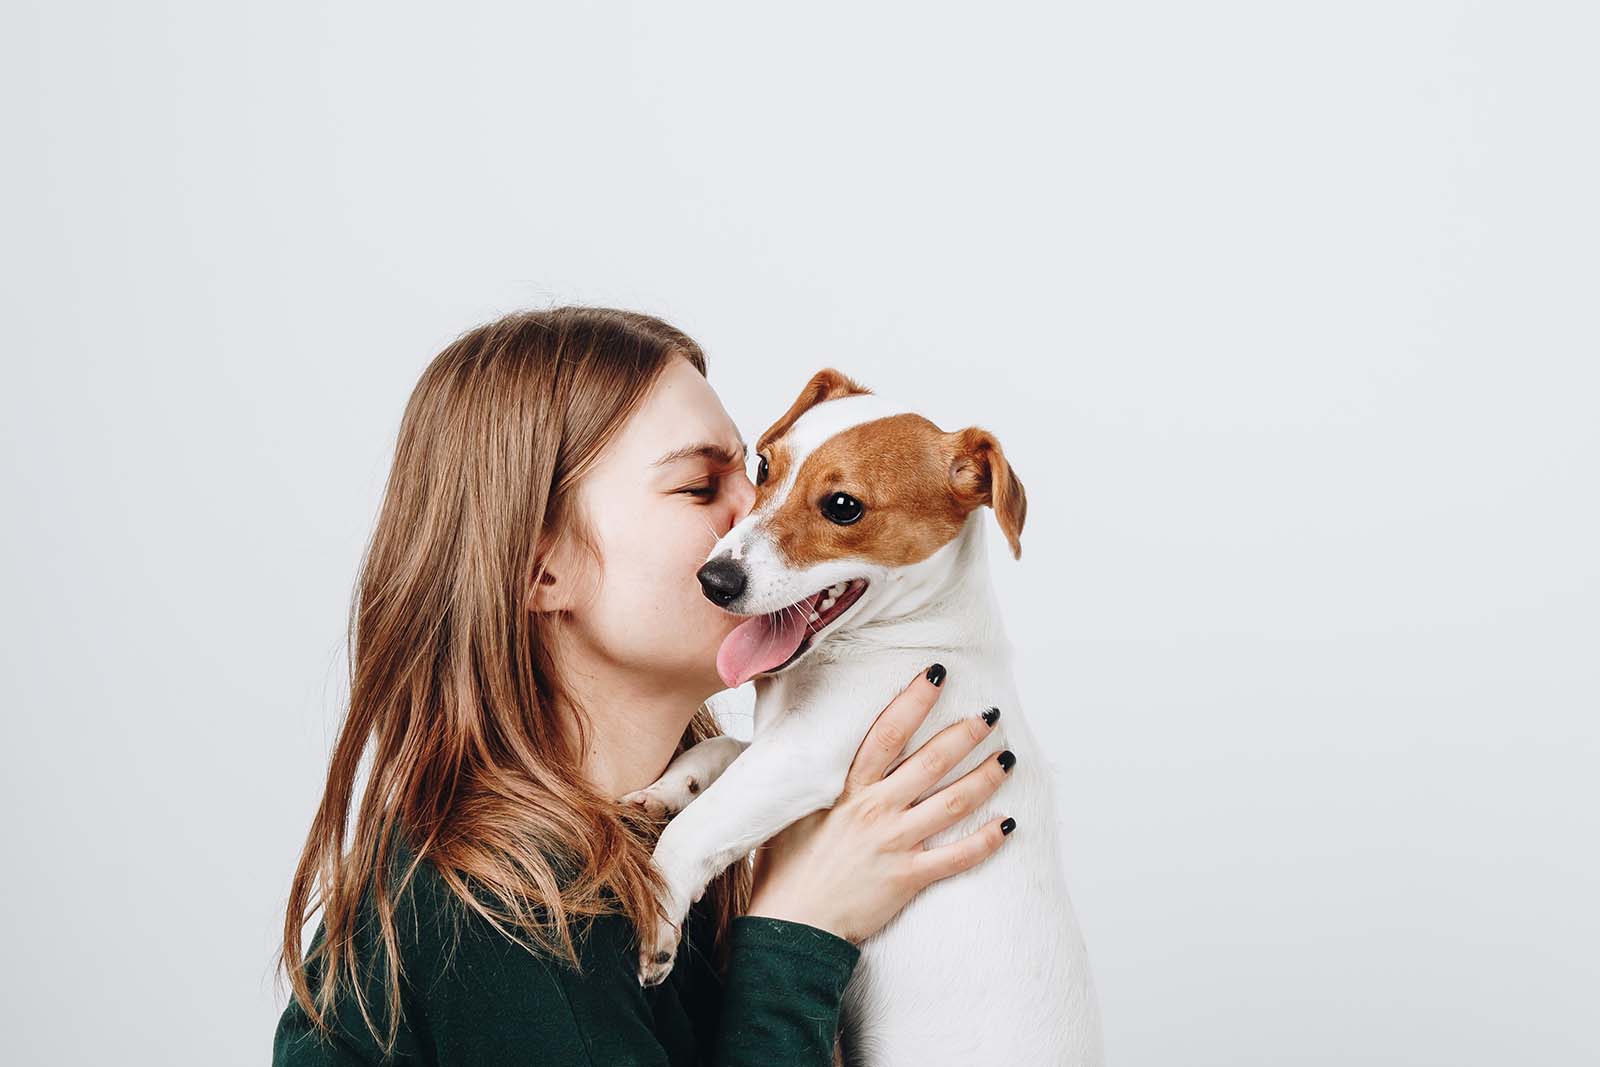 Kissing a dog